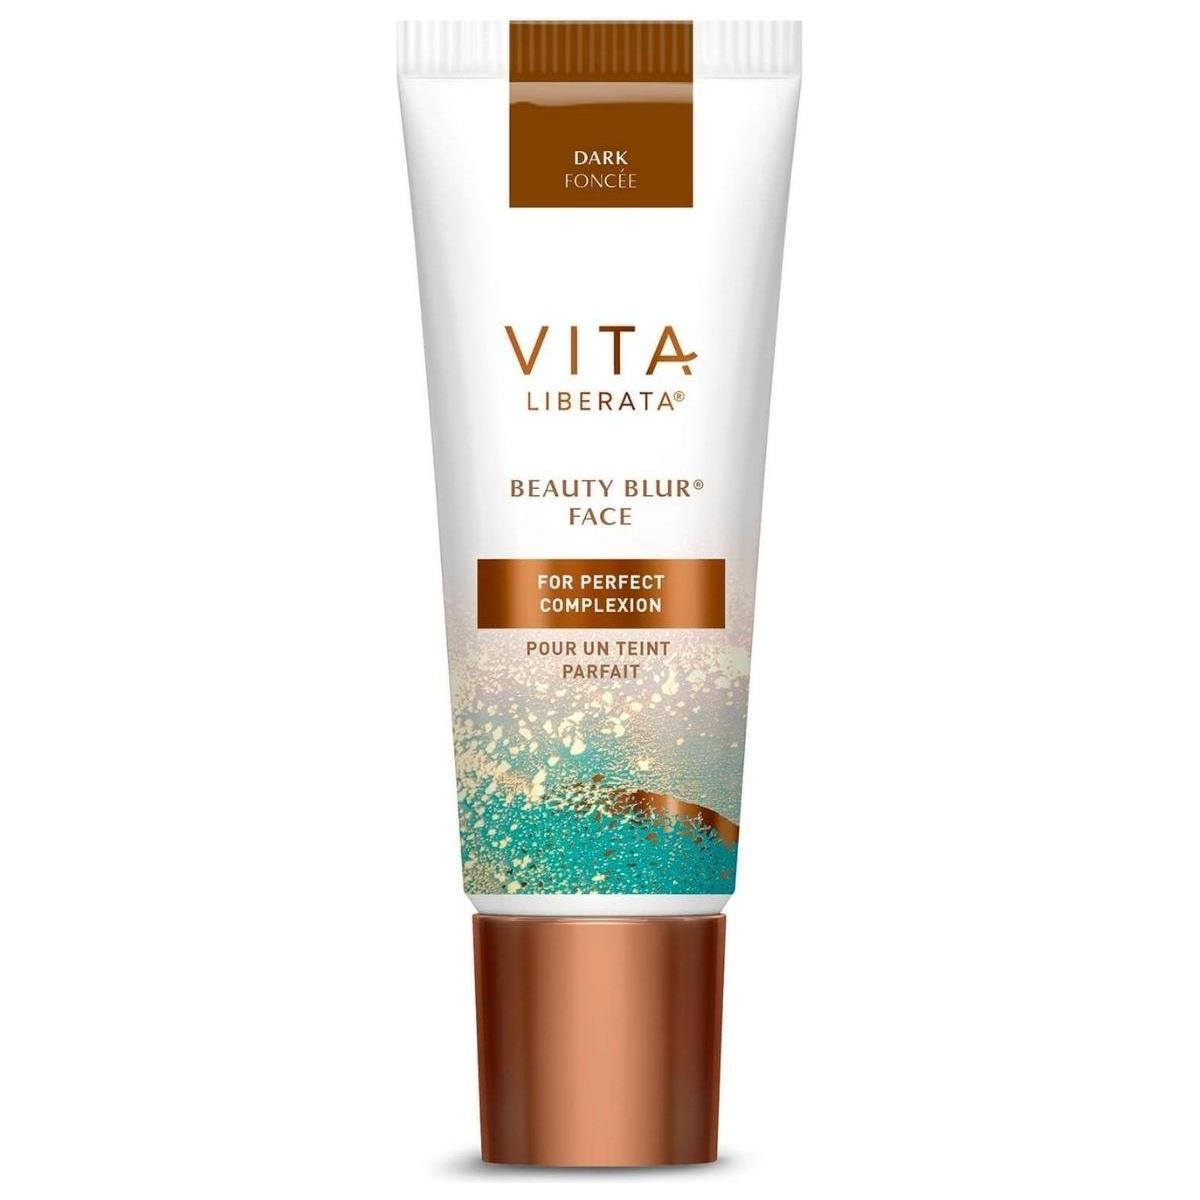 Vita Liberata | Beauty Blur Face with Tan | Dark - DG International Ventures Limited